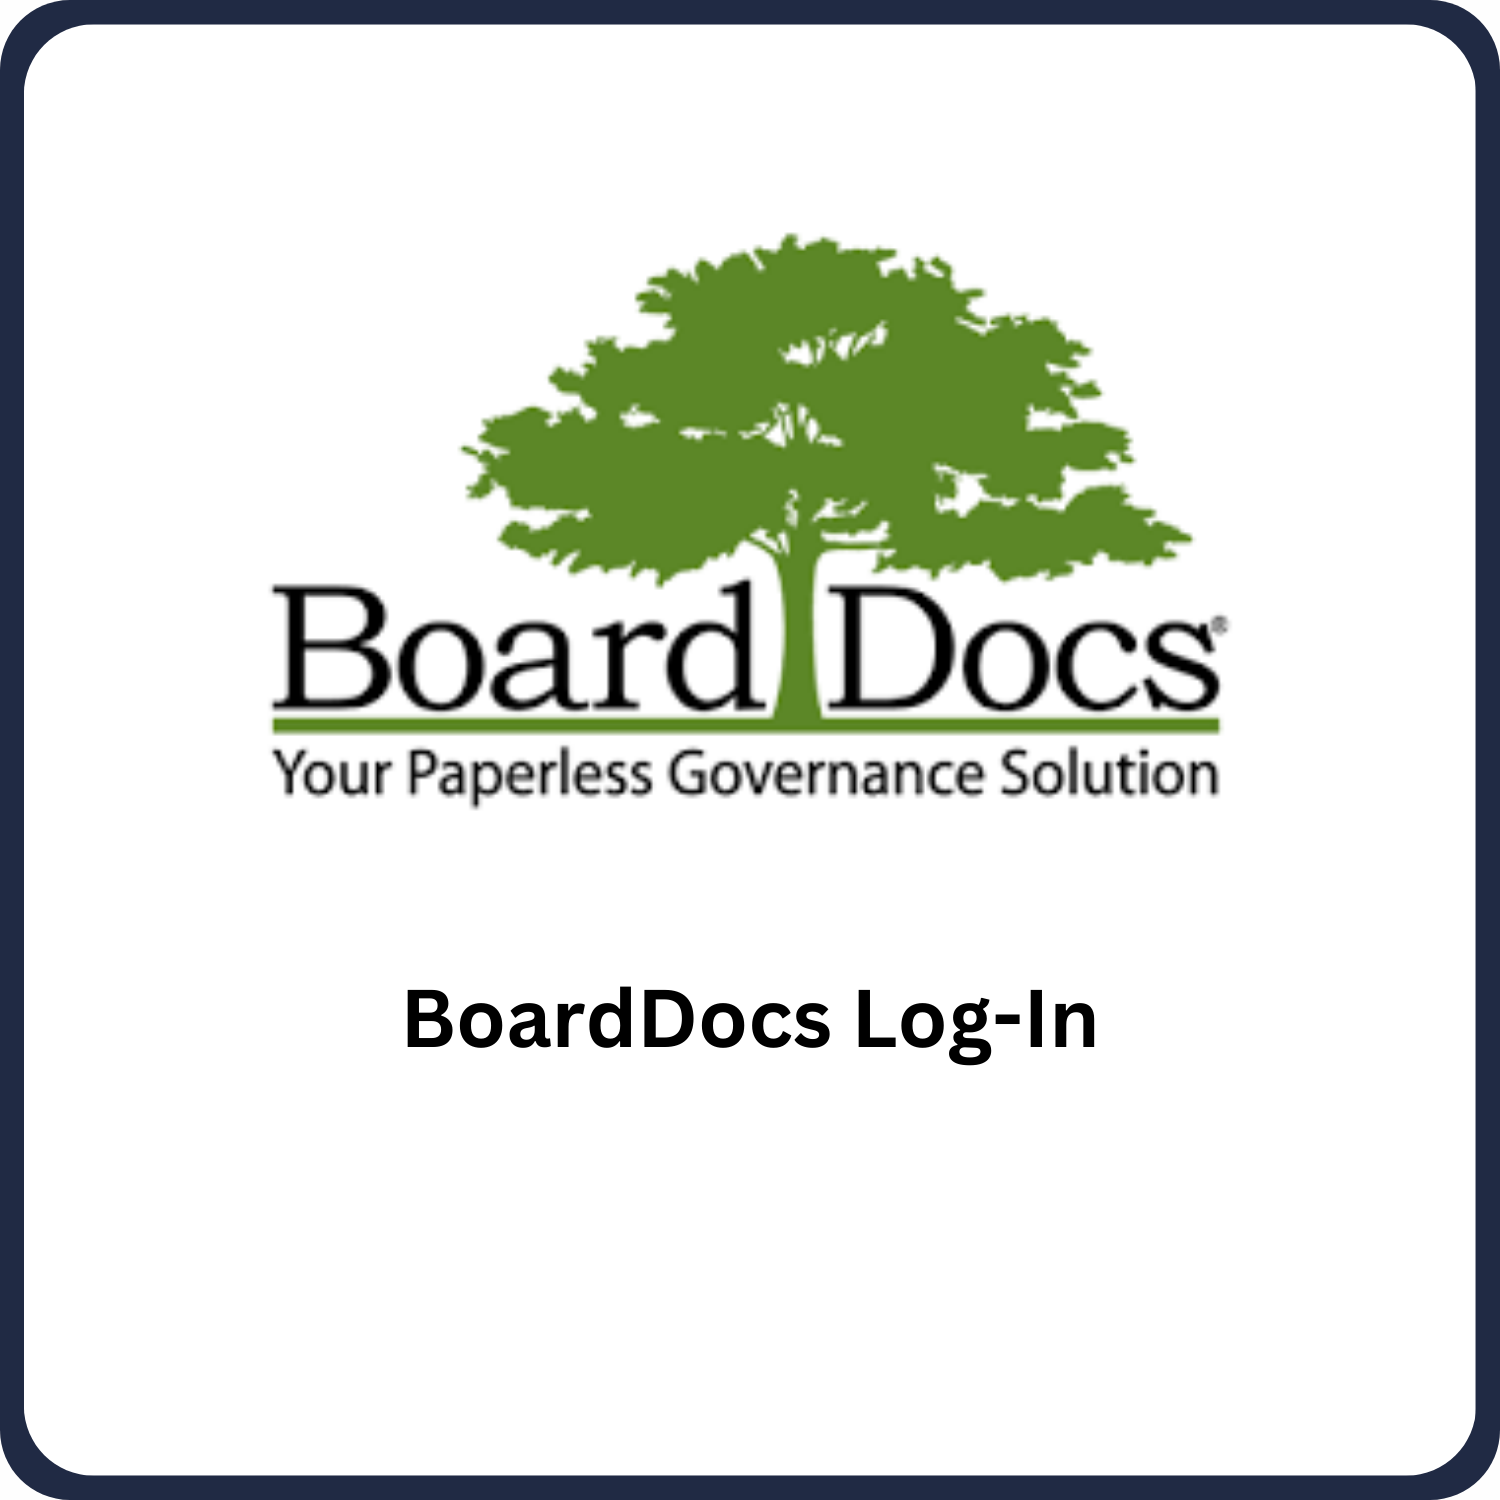 BoardDocs Log-In